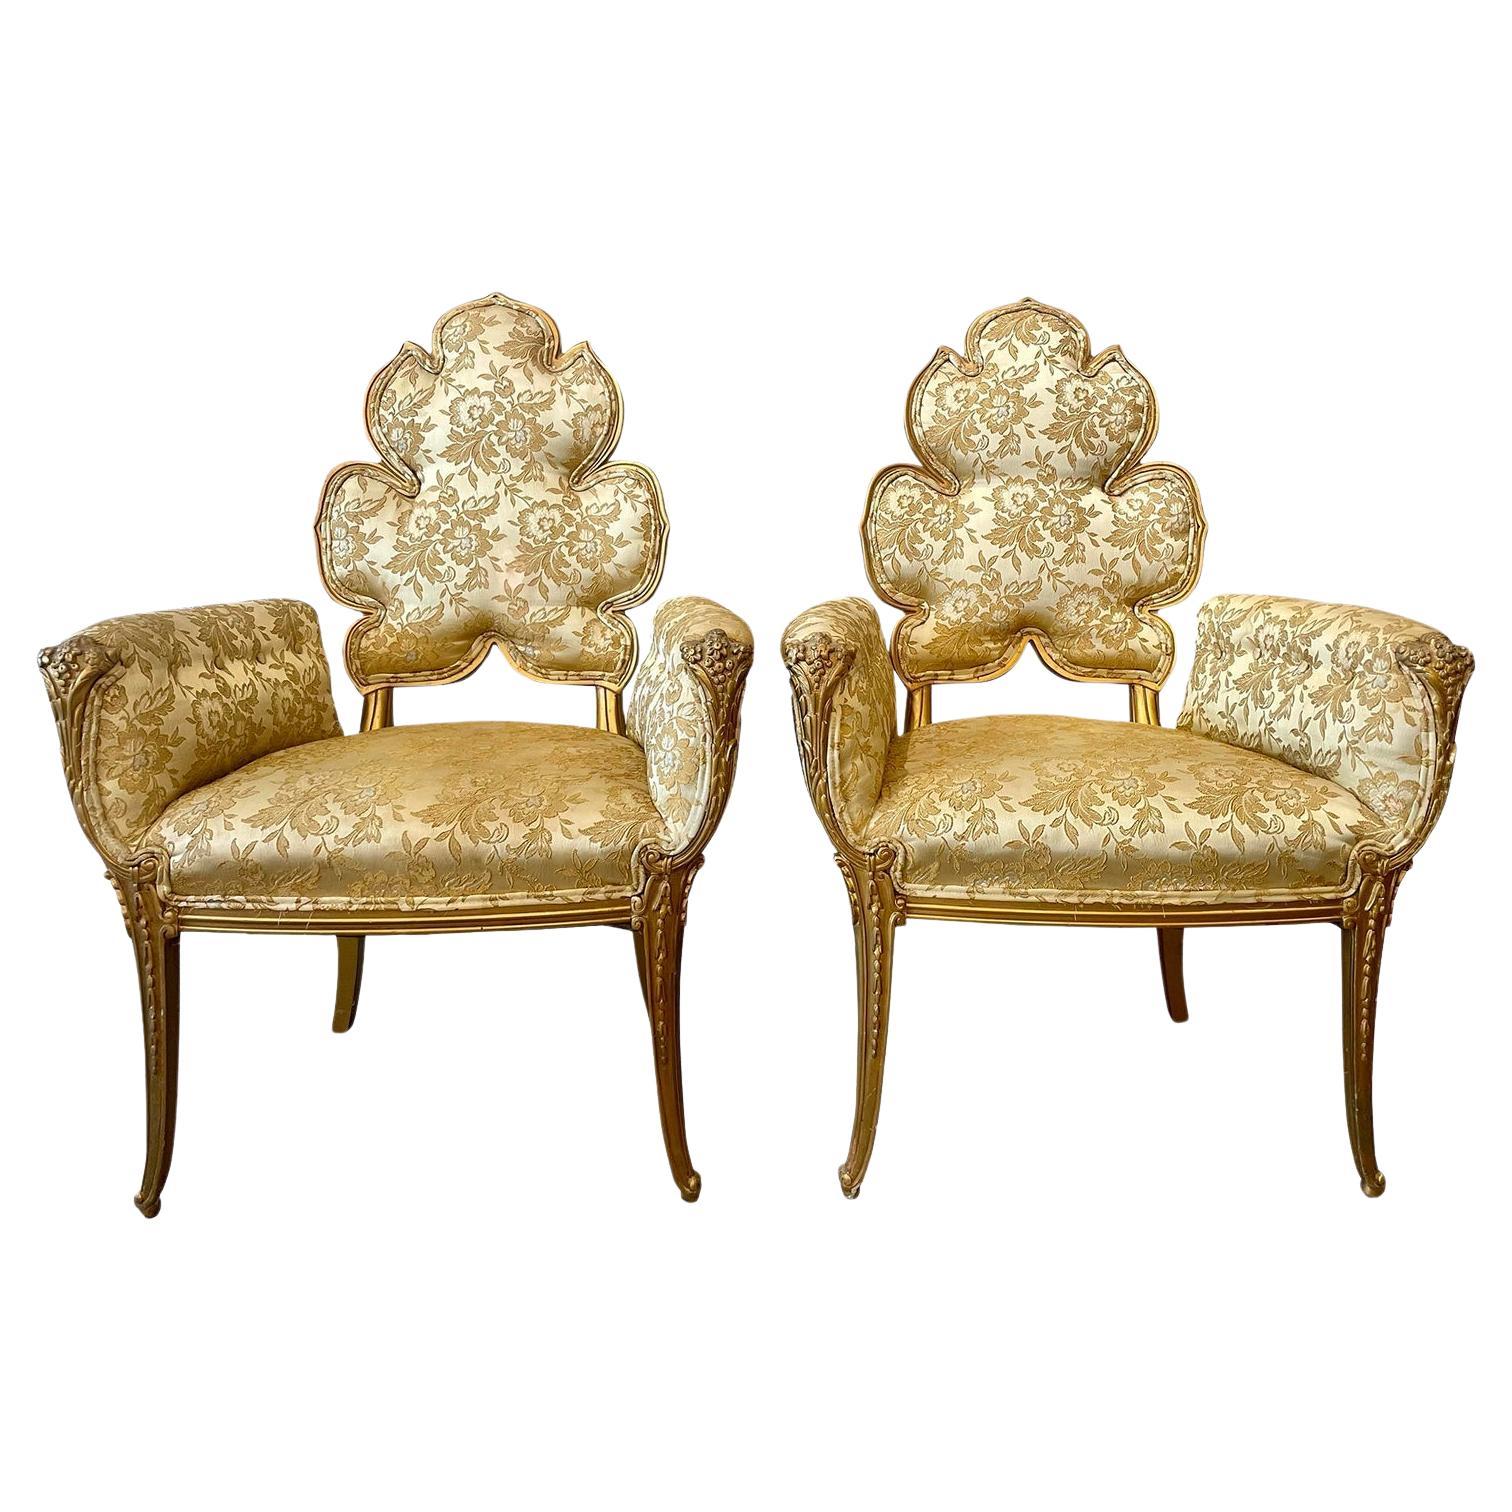 1940s Grosfeld House Leaf Flower Chairs - a Pair